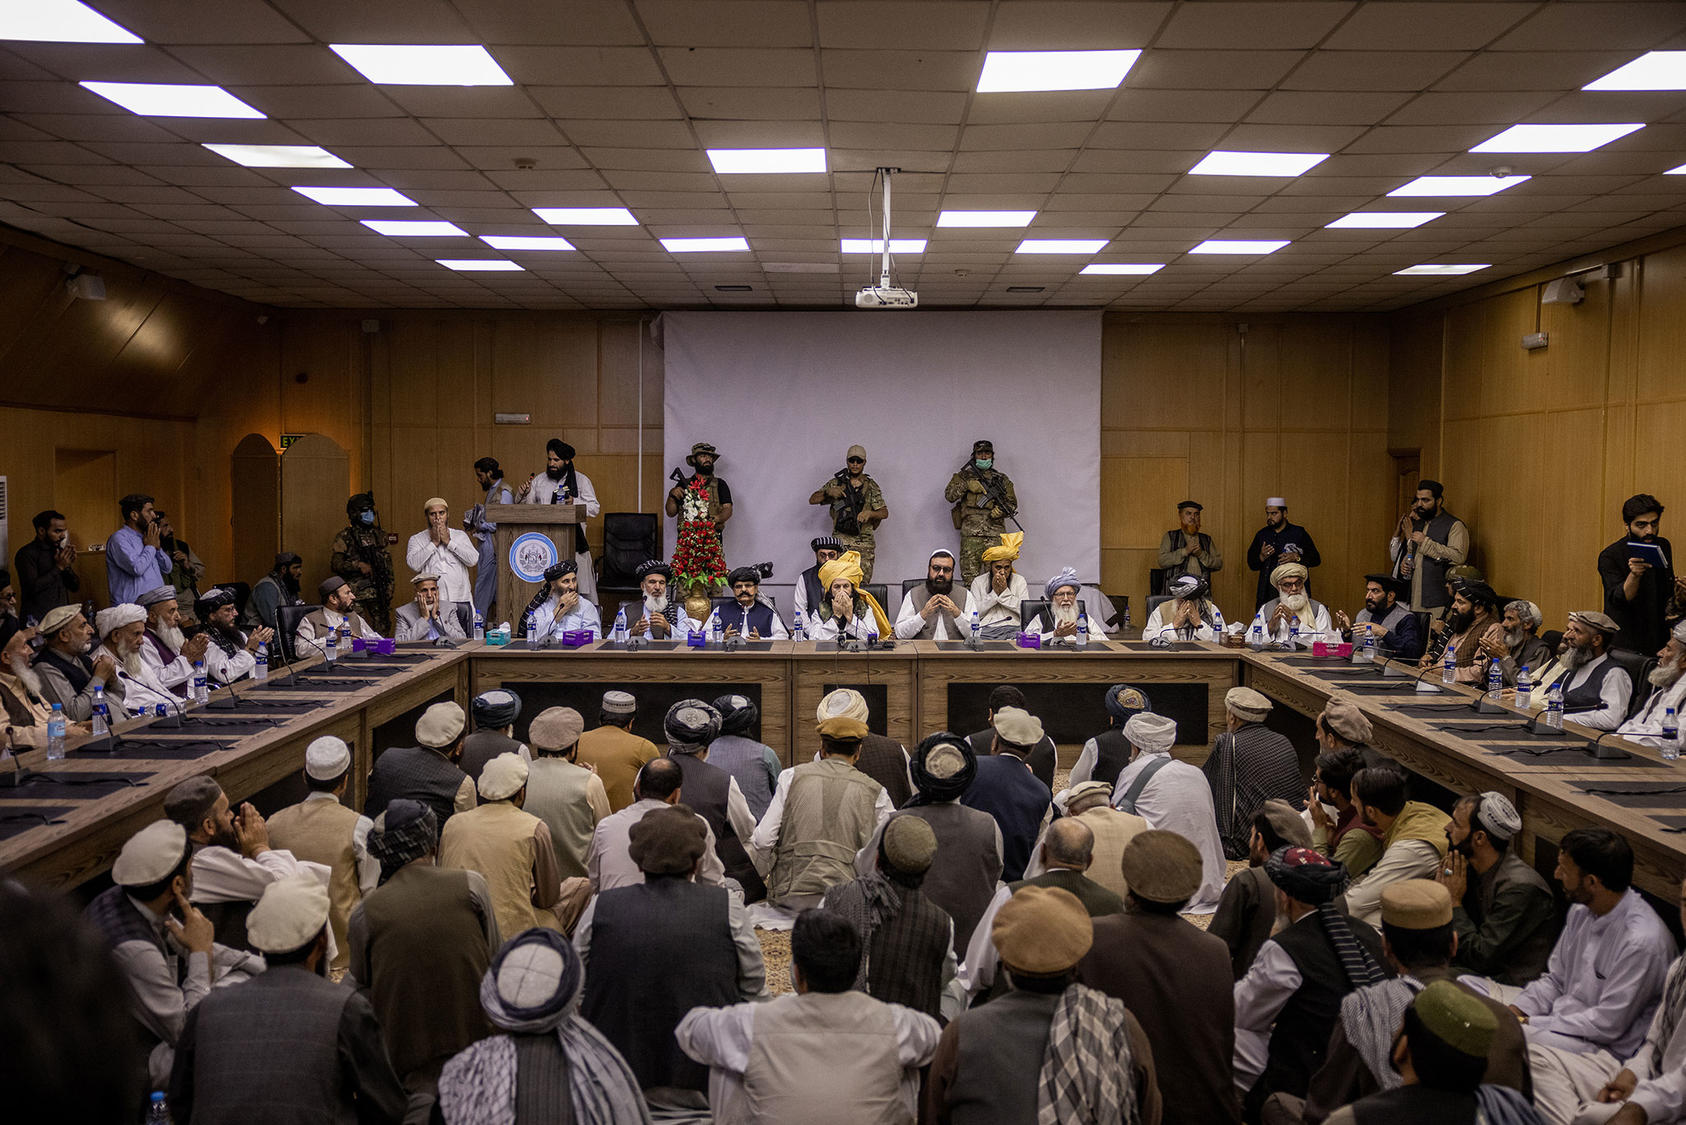 Khalil Haqqani, a leader of the Taliban-affiliated Haqqani network, center, leads a gathering of tribal elders in Kabul, Afghanistan on Aug. 26, 2021.  (Jim Huylebroek/The New York Times)